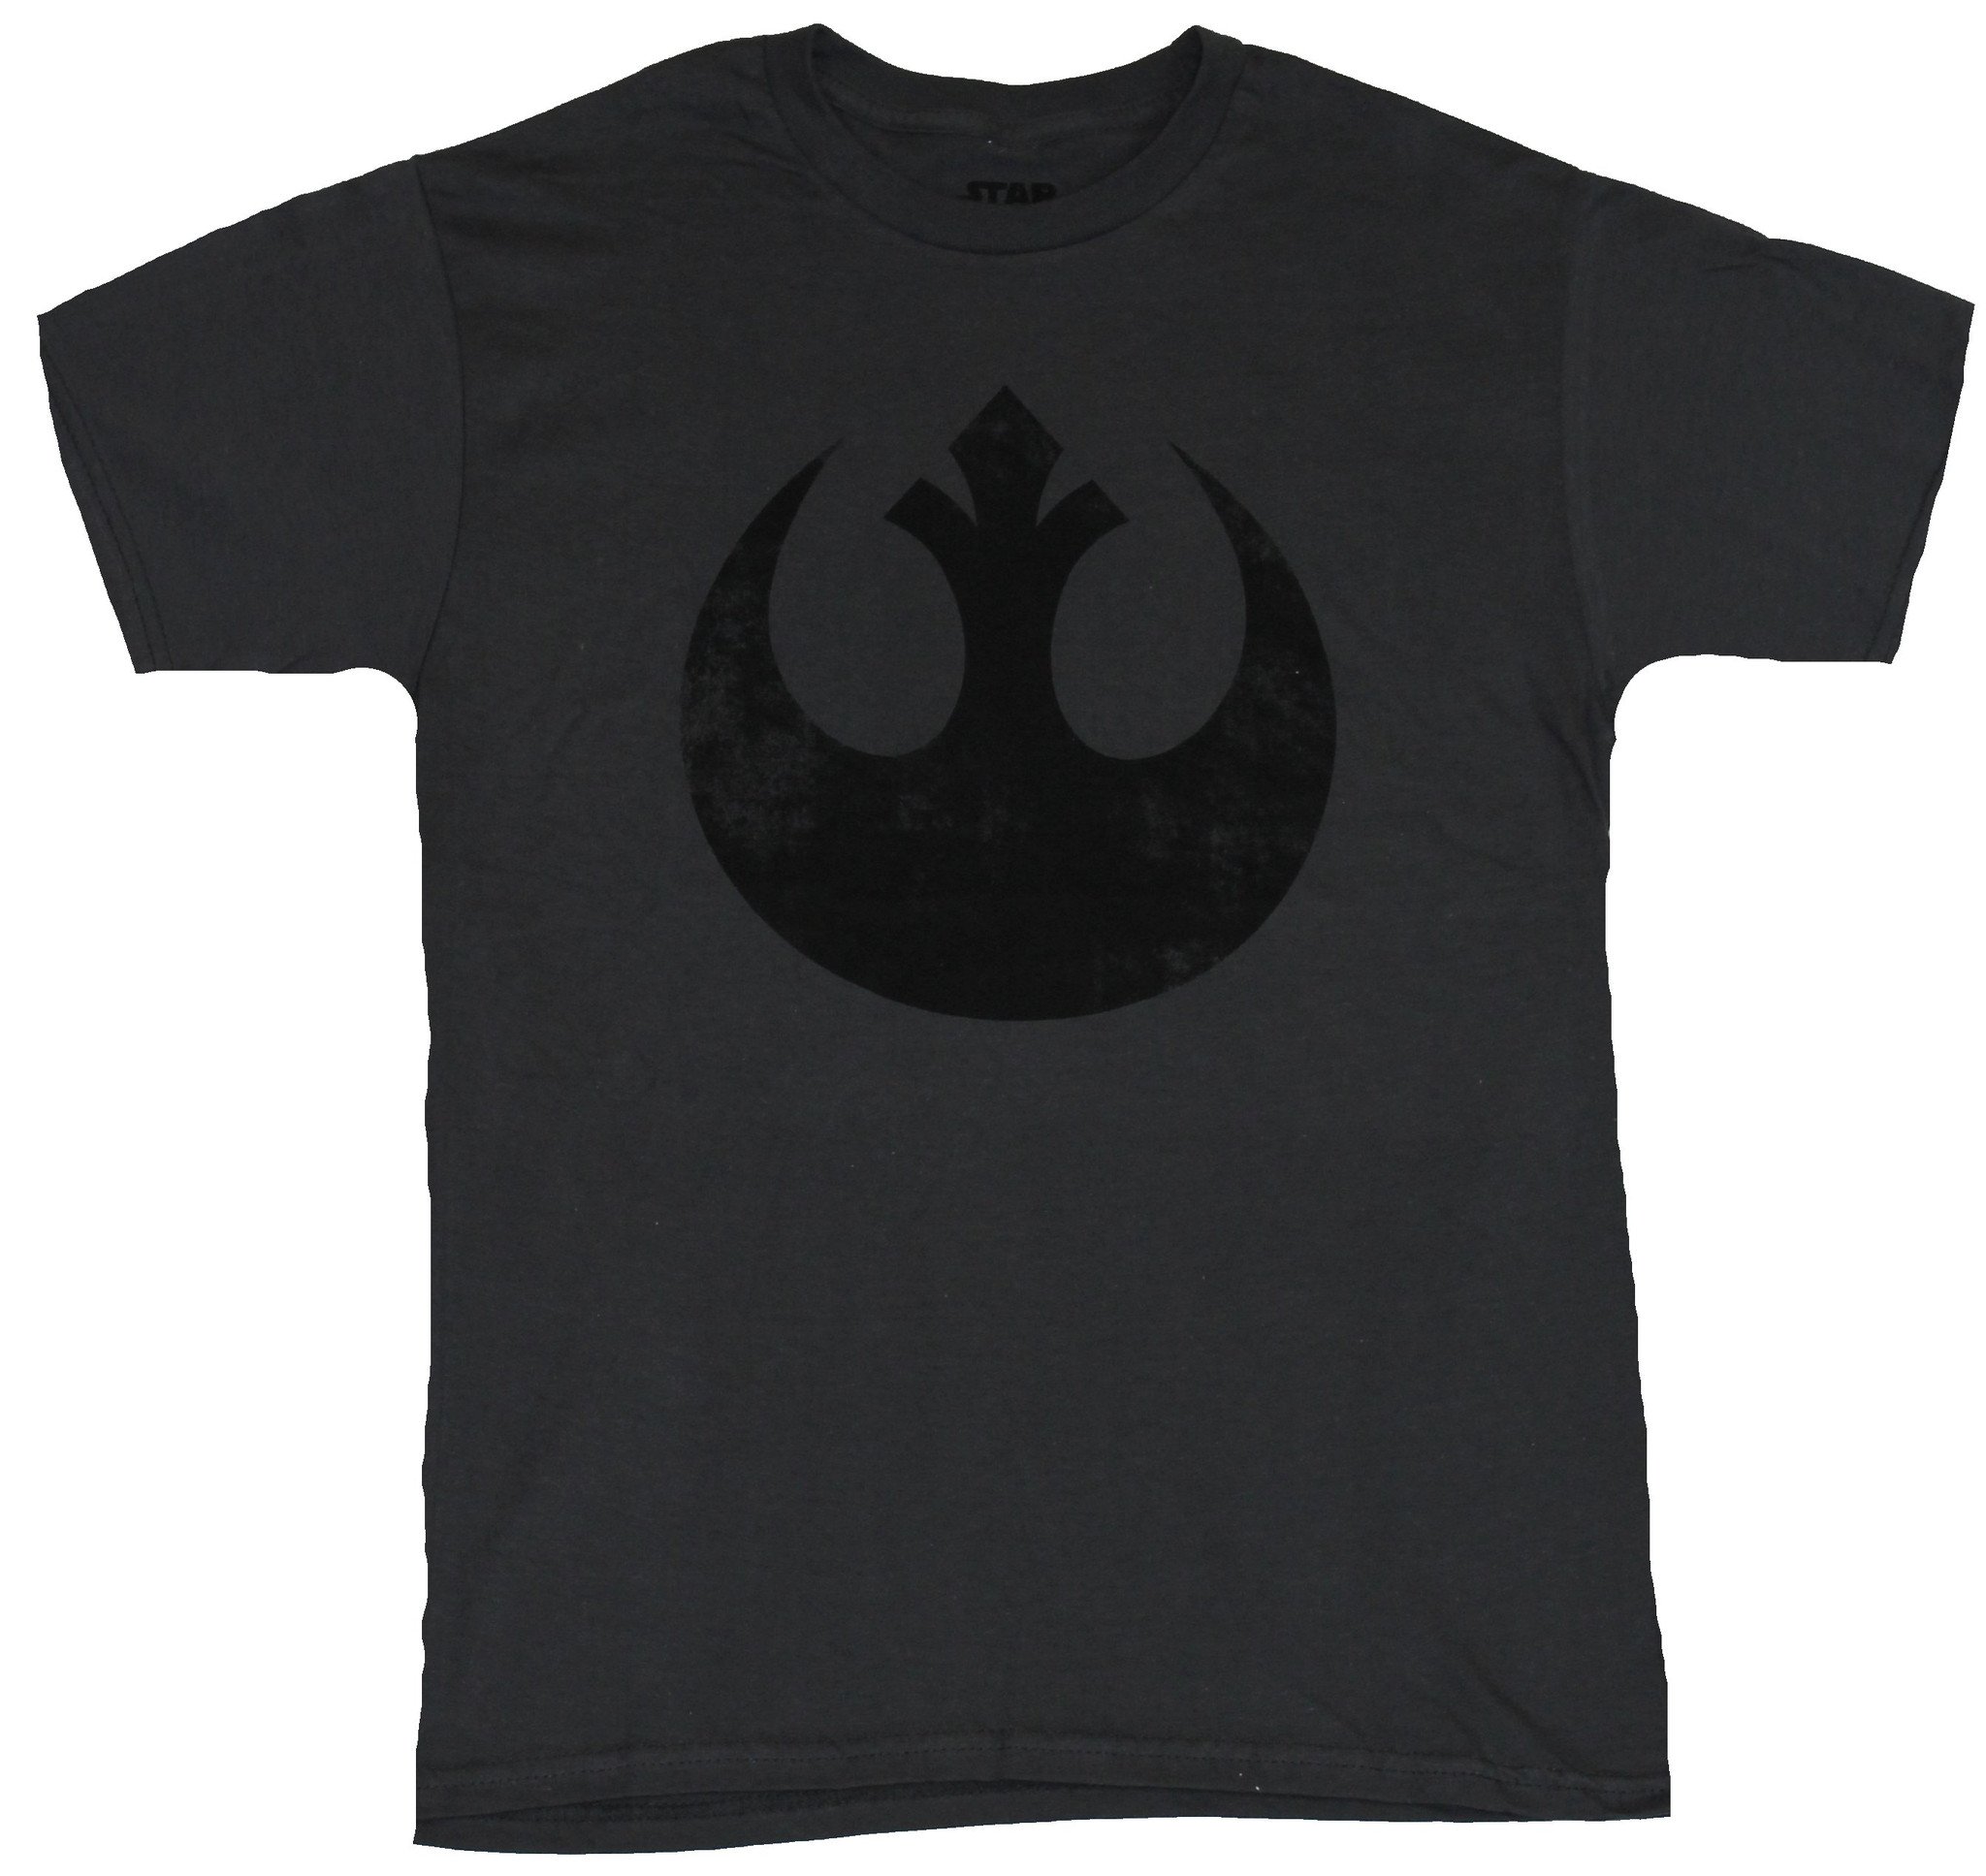 Online like star wars rebel logo t shirt